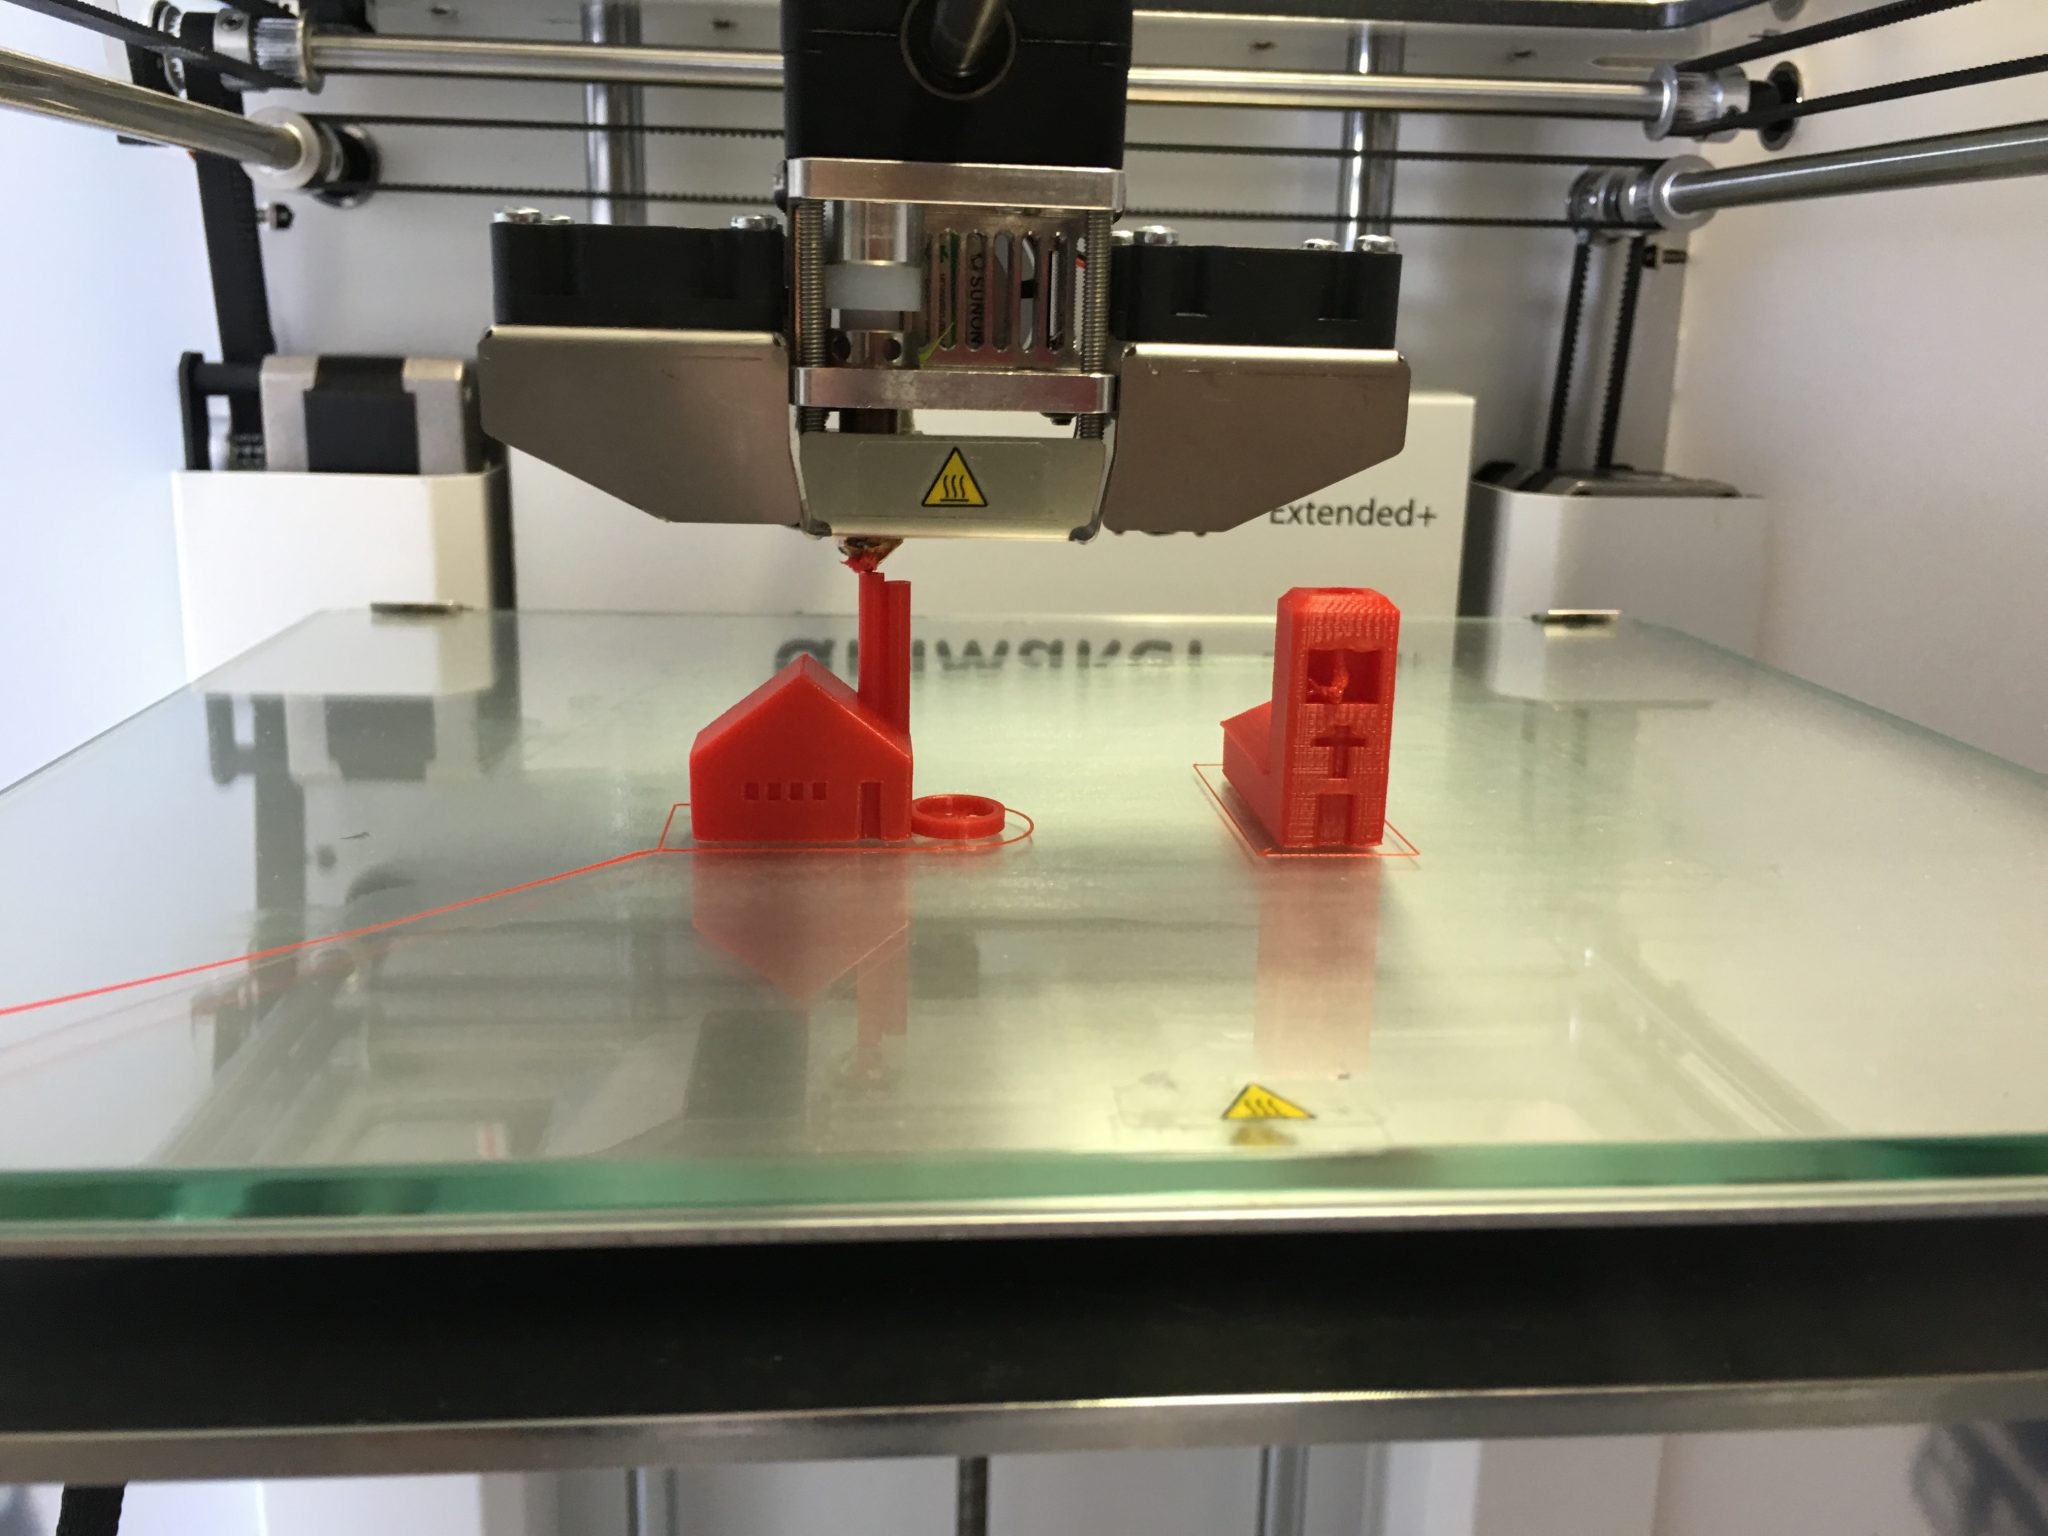 A 3D Printer printing out miniature D&D figurines